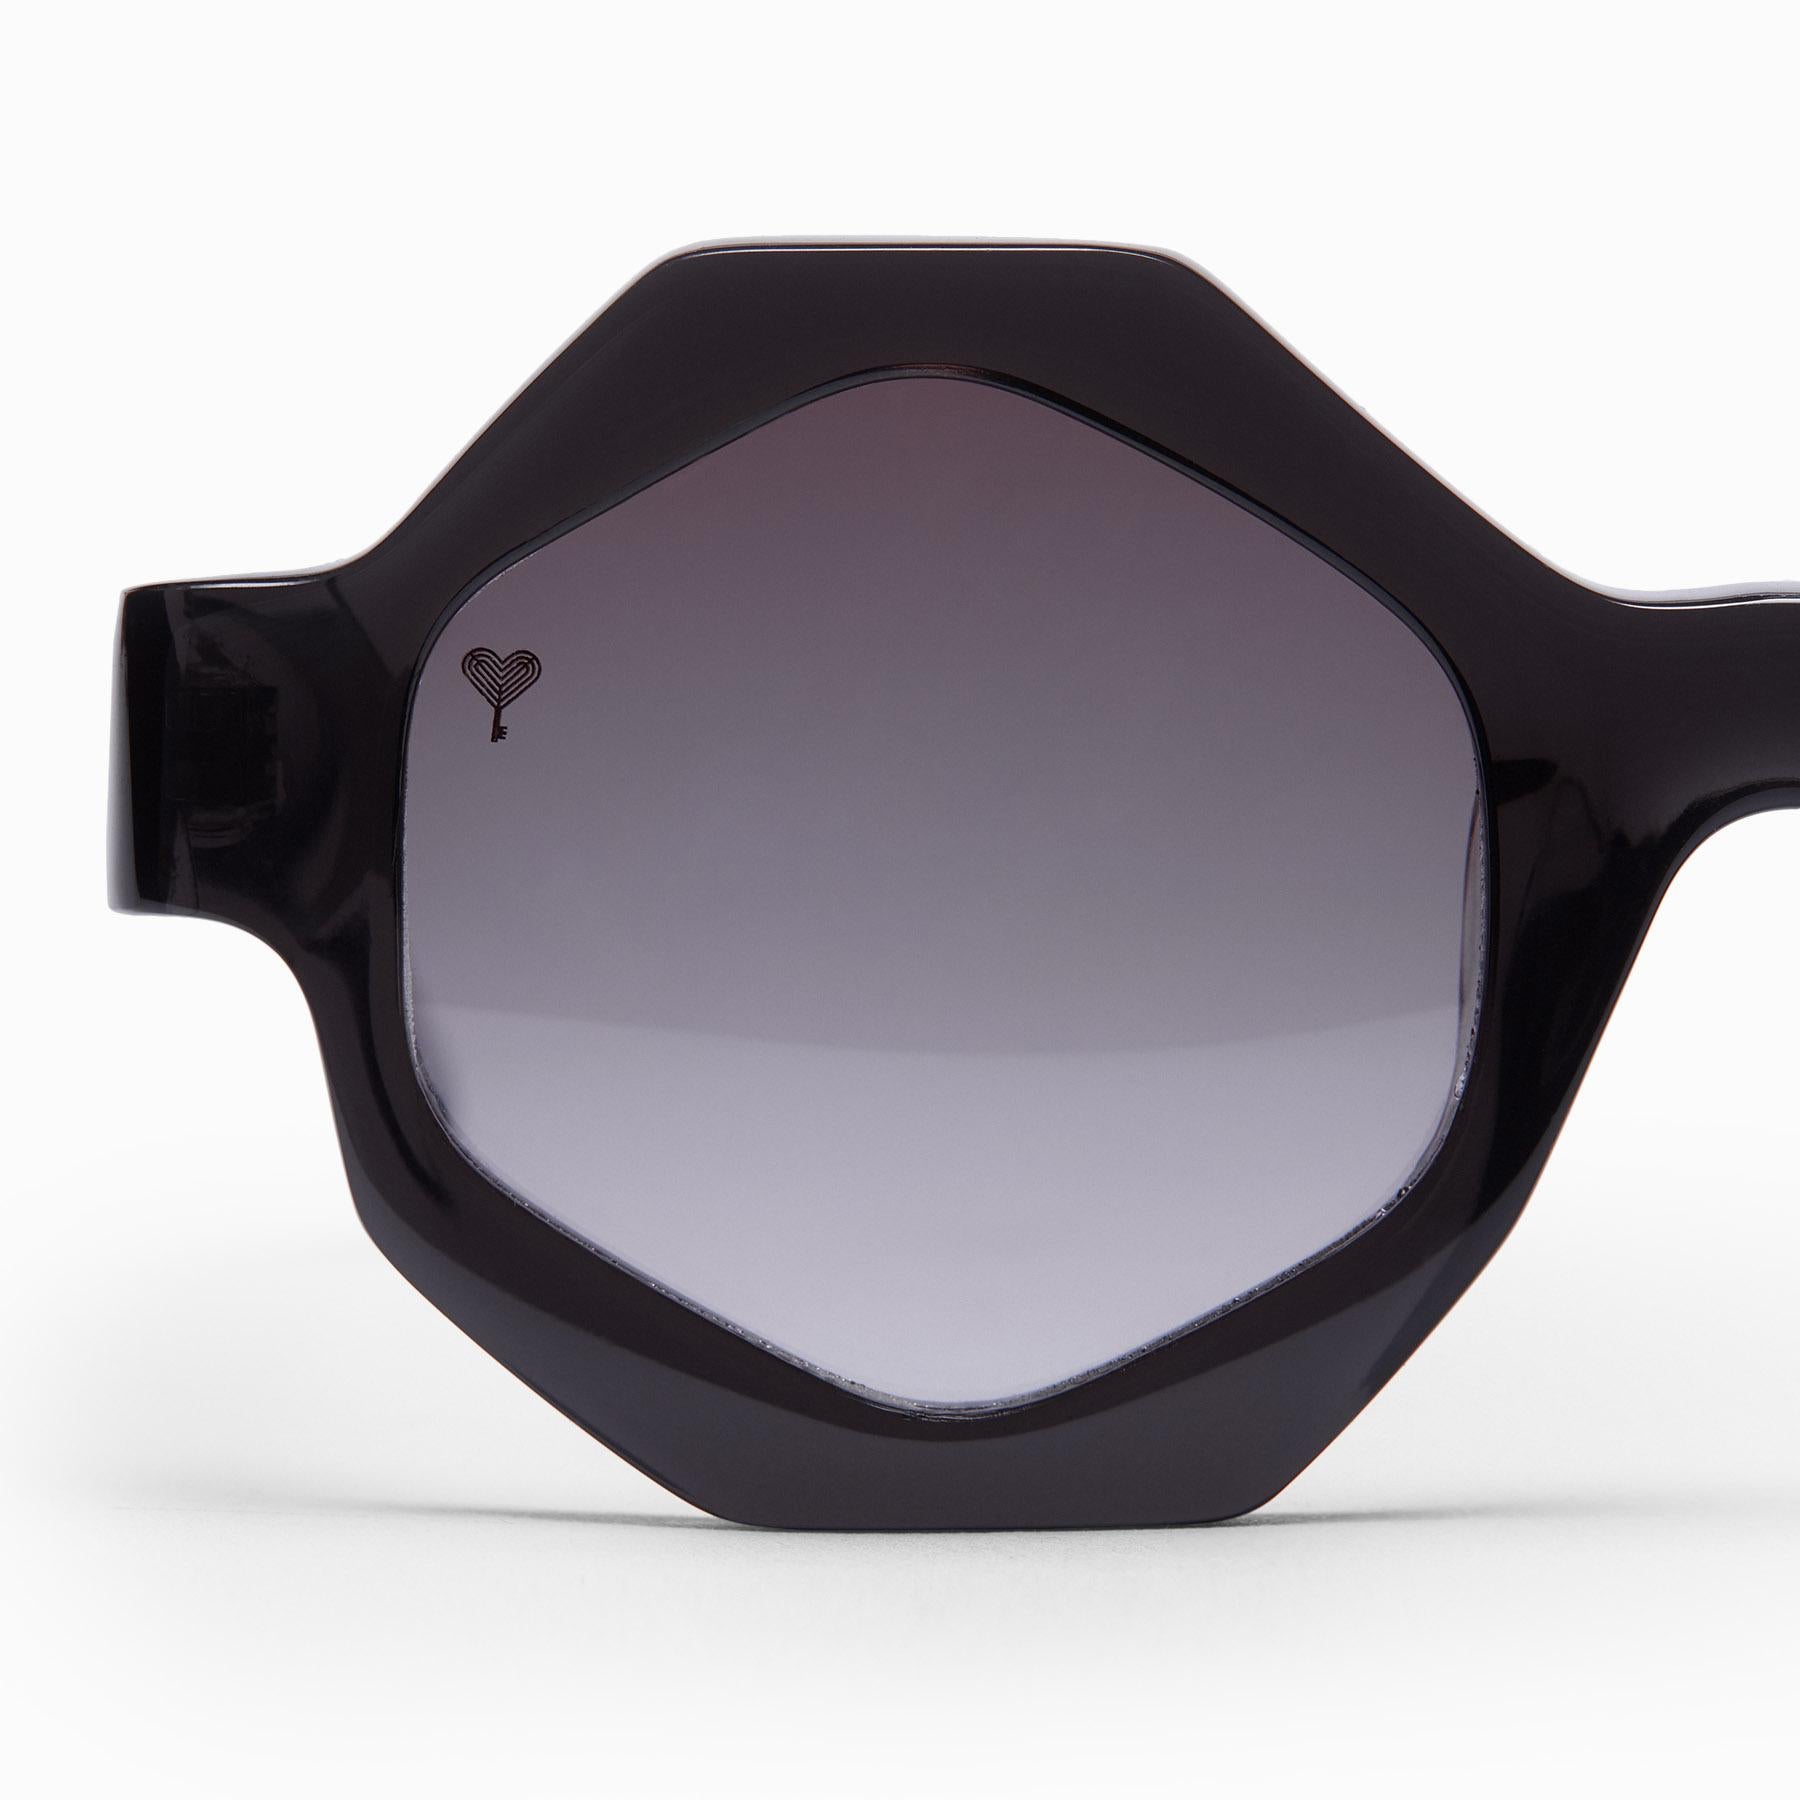 Black Hexagon Sunglasses